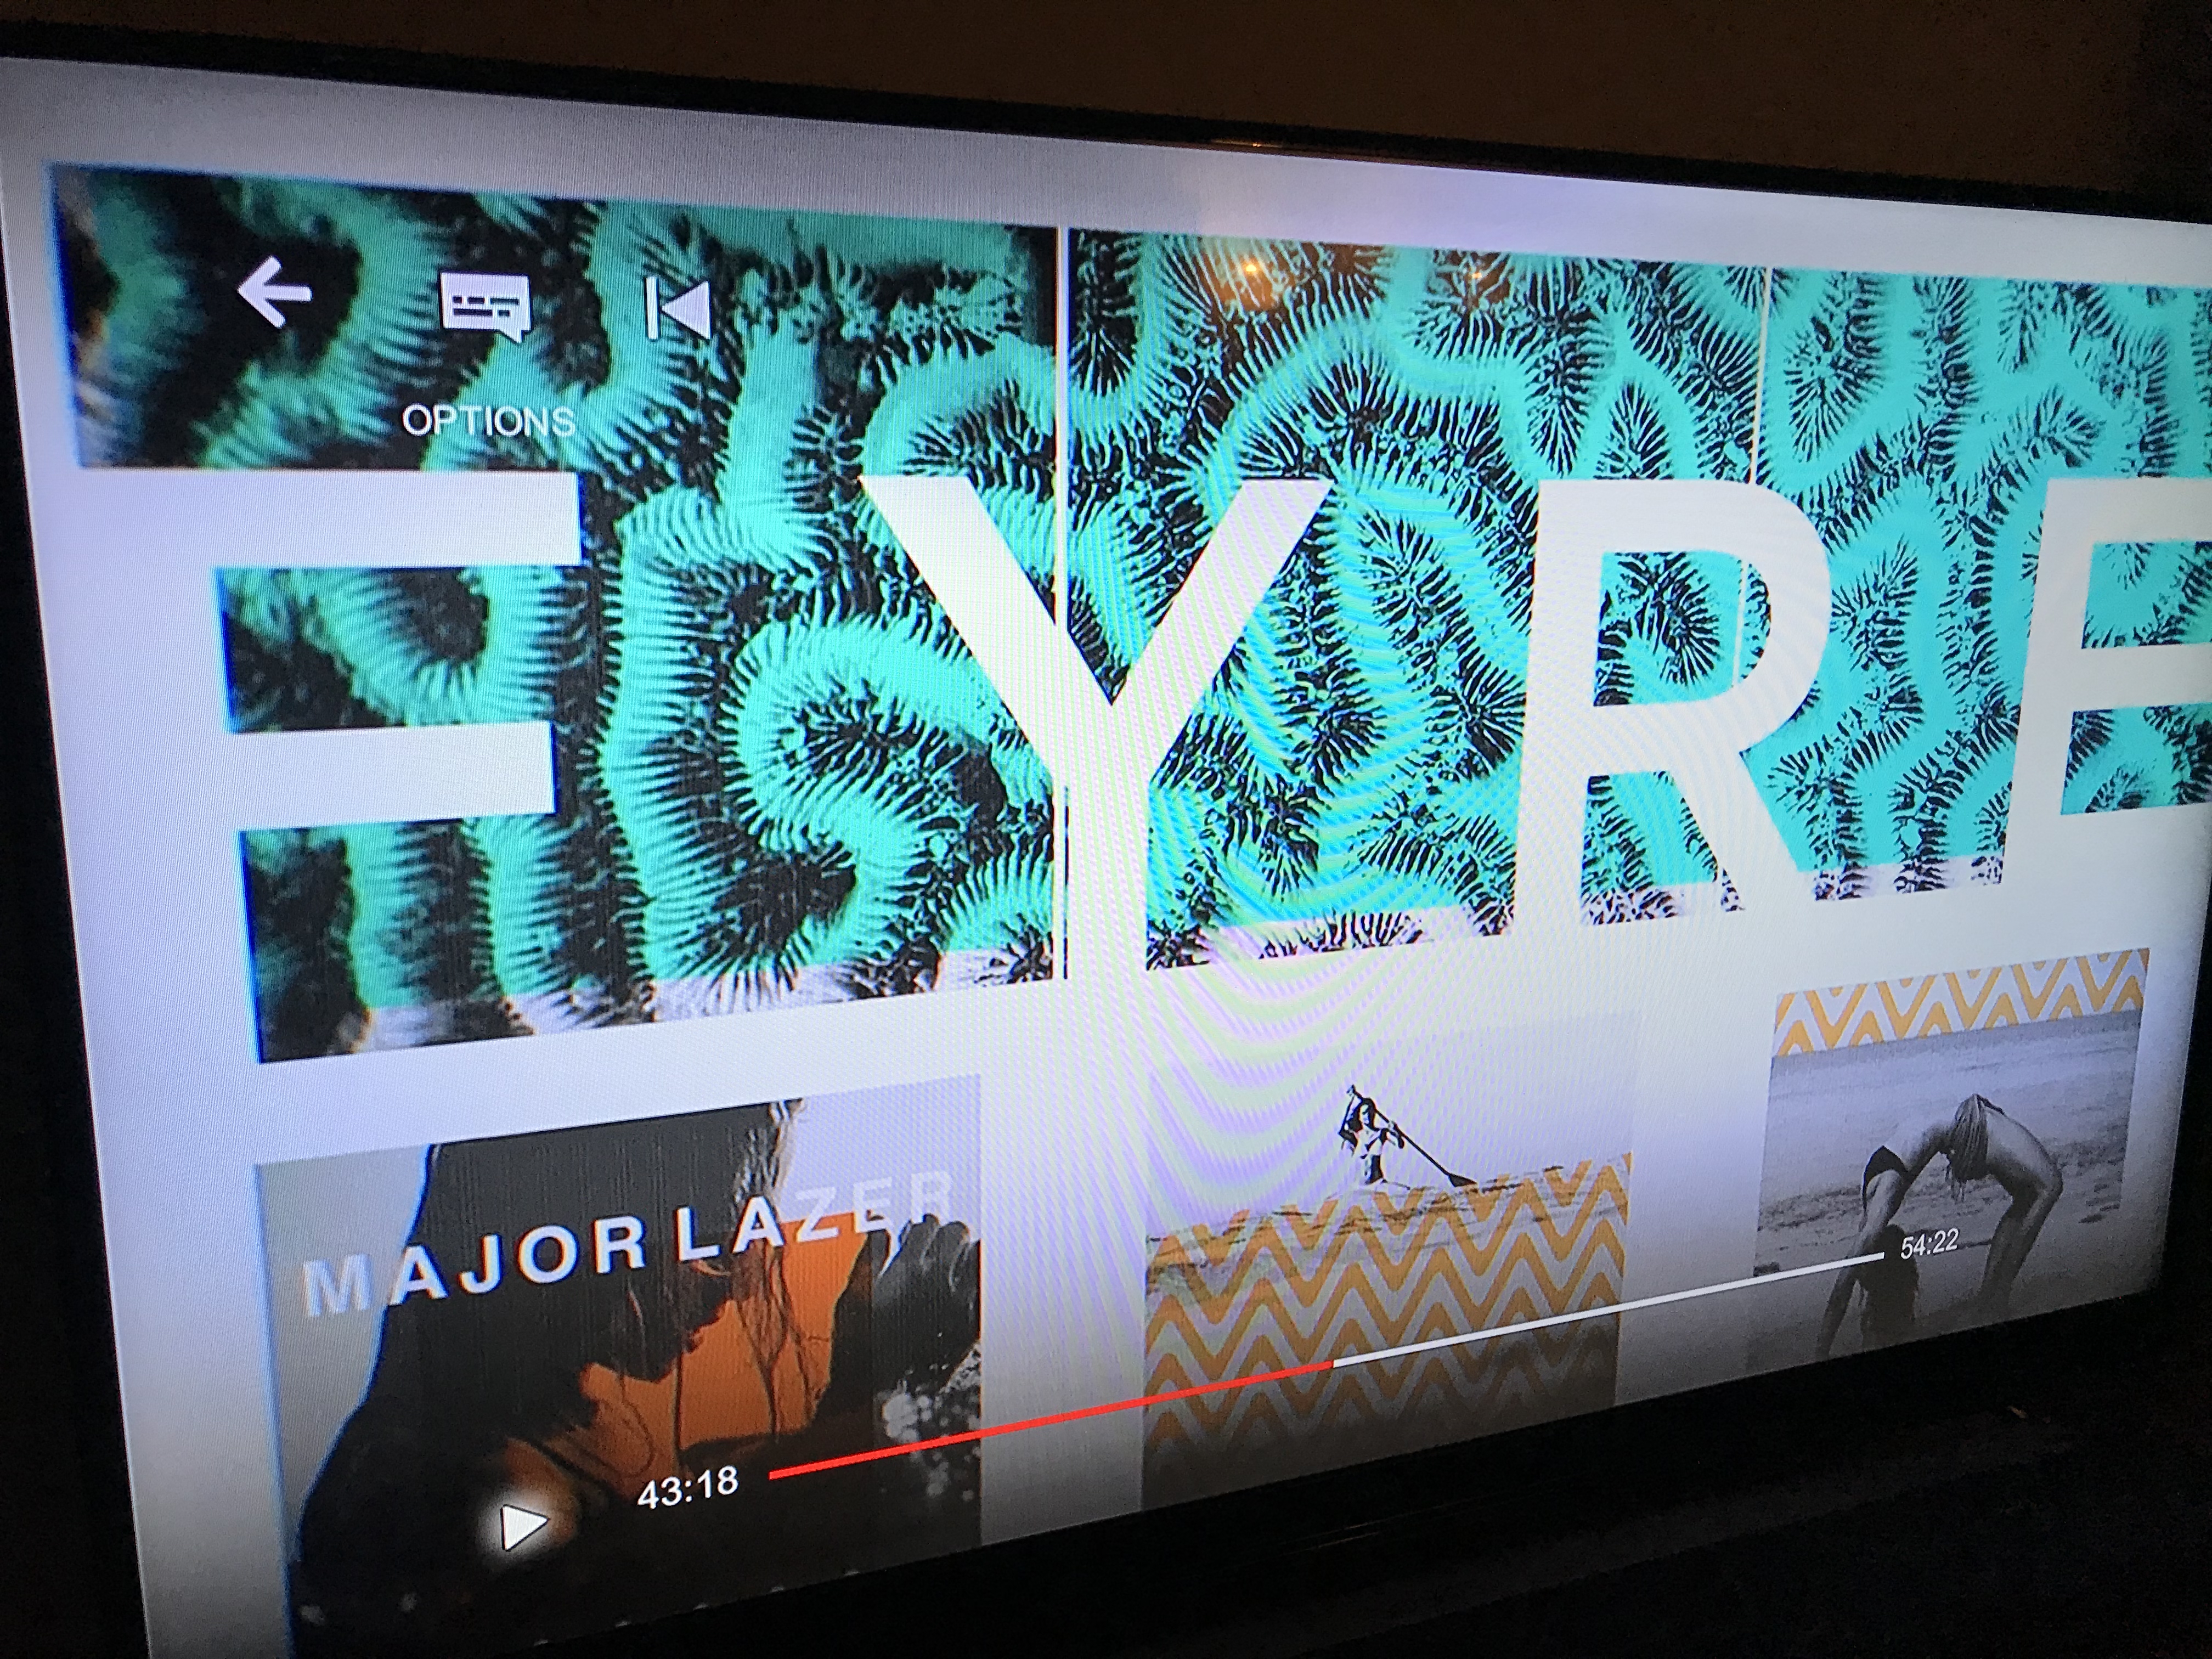 Fyre Festival Documentary on Netflix - Photo